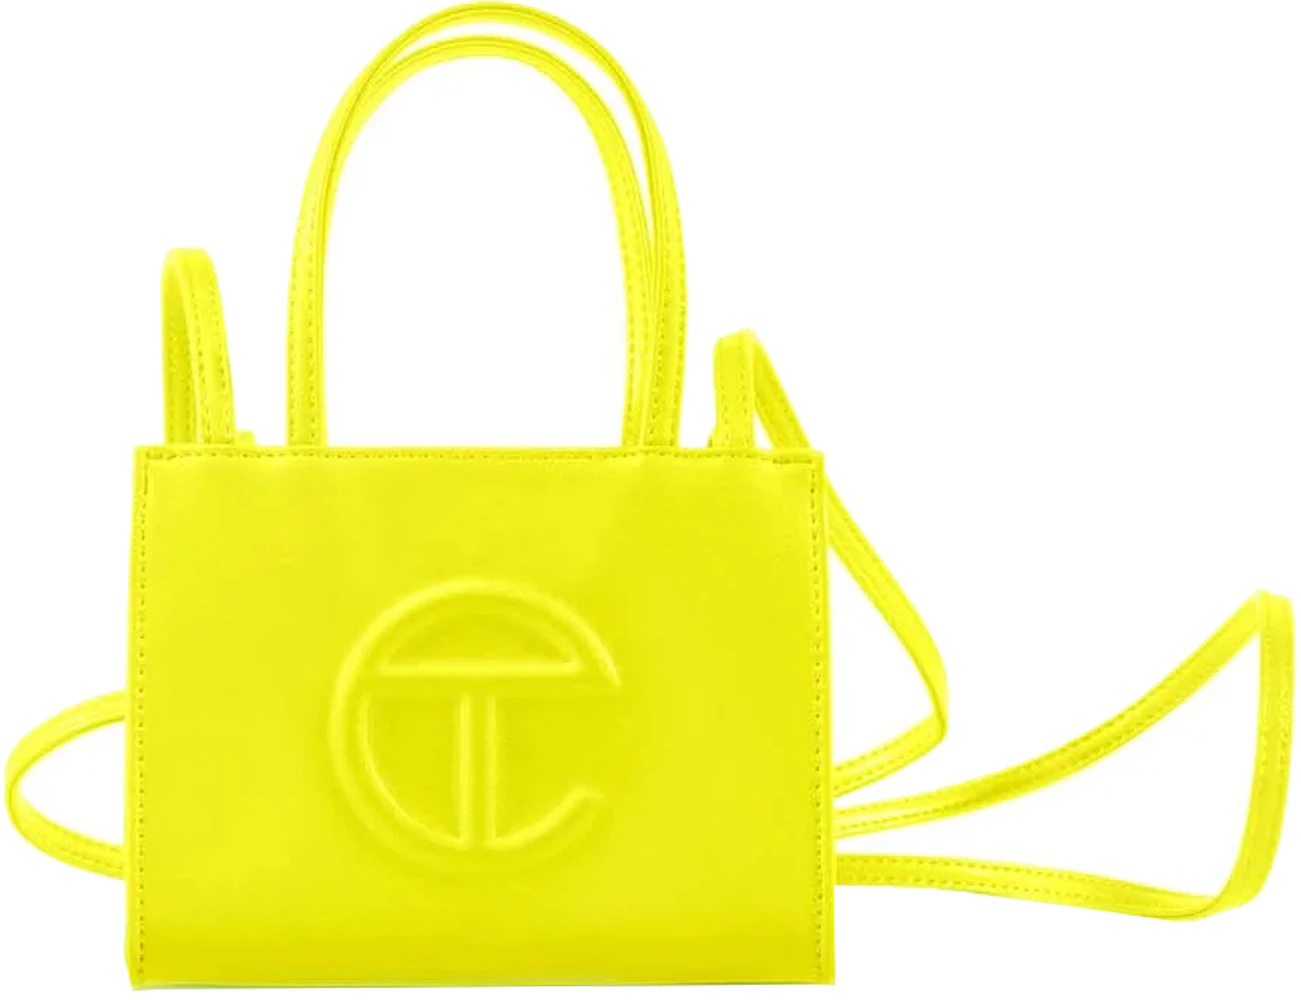 How Much Does a Telfar Bag Cost? - StockX News